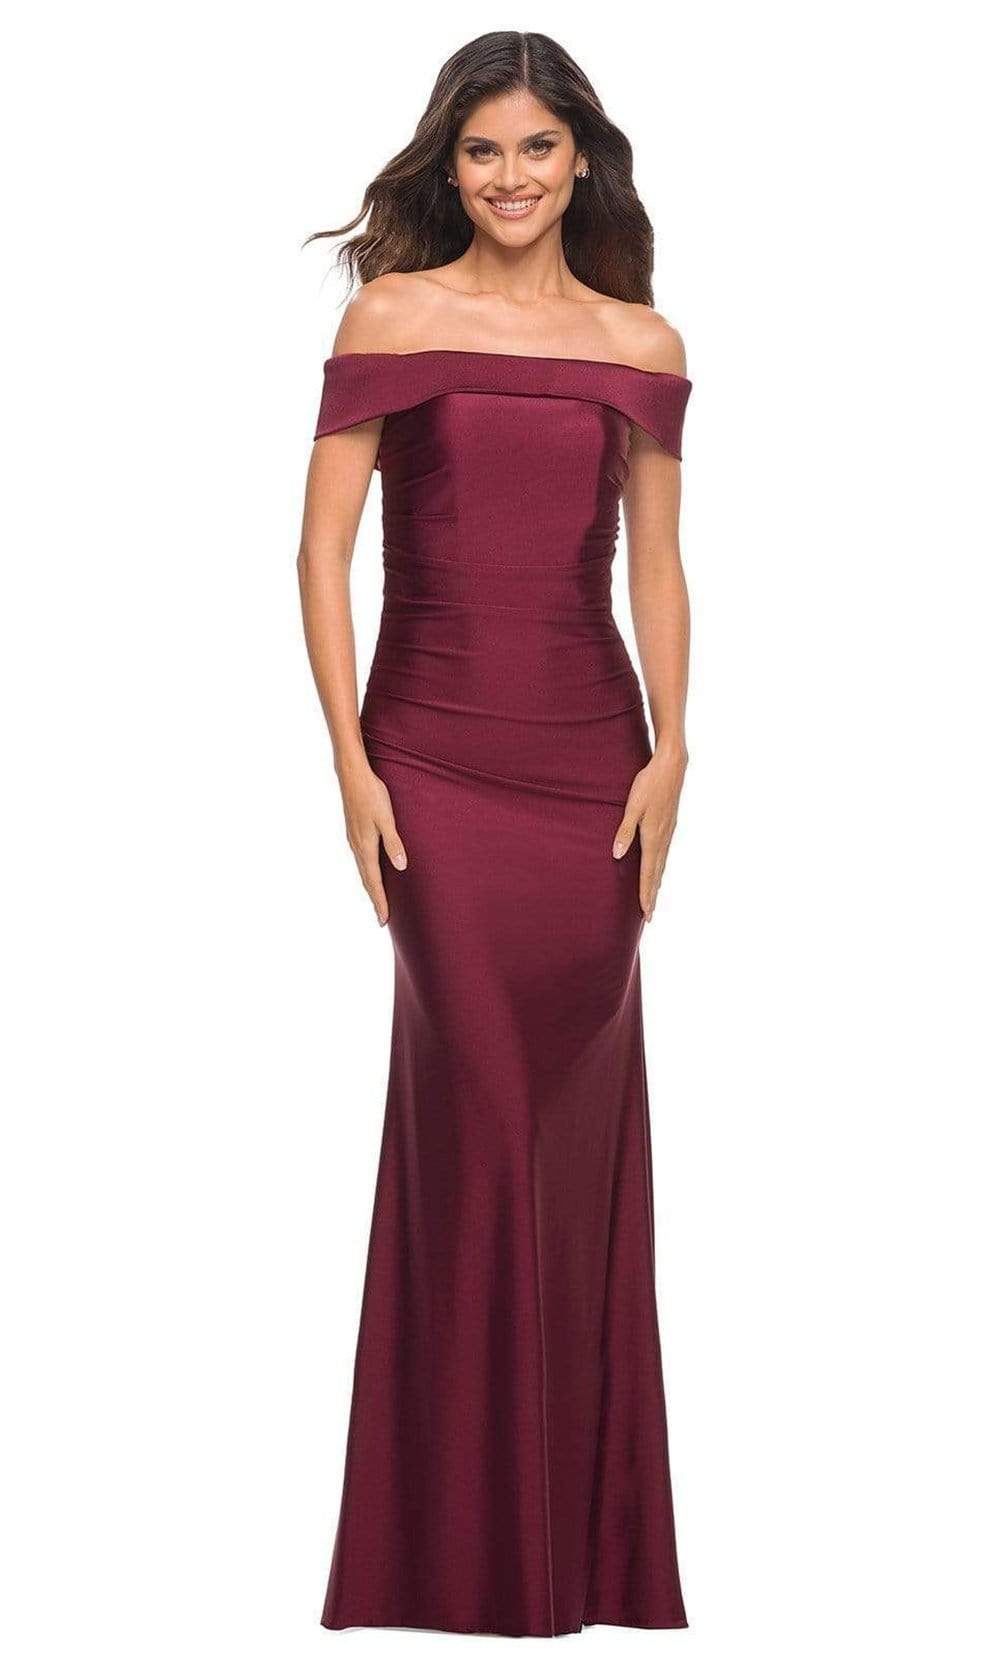 La Femme - 30422 Off Shoulder Sheath Dress Special Occasion Dress 00 / Wine